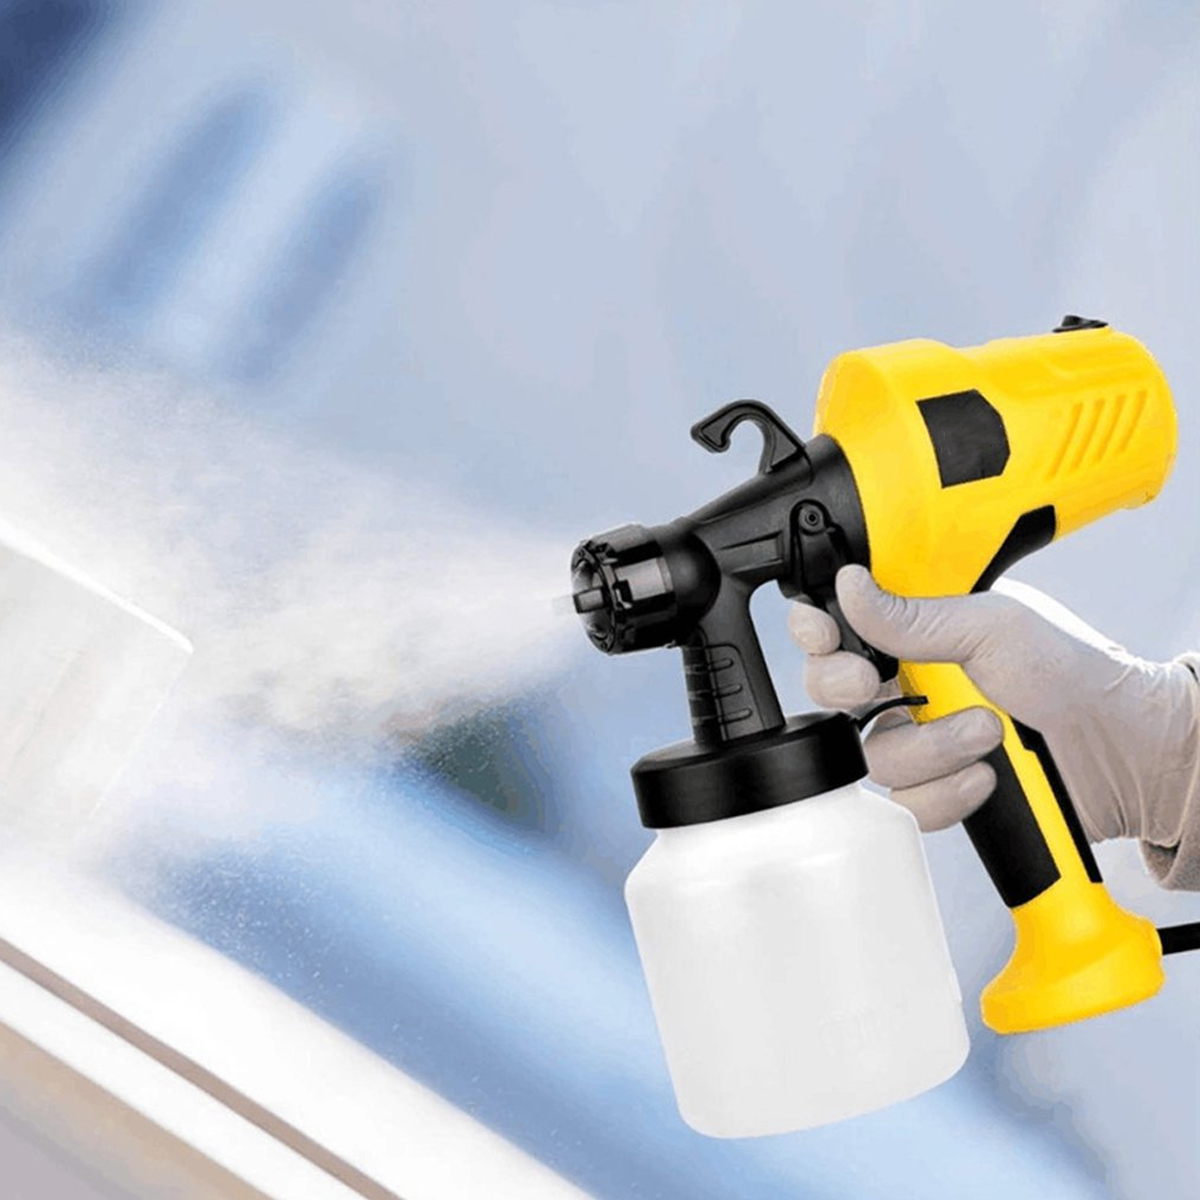 800ml-Electric-Paint-Spray-Guns-Disinfectant-Sprayer-Household-Portable-Disinfecting-Spray-DIY-Paint-1866548-8